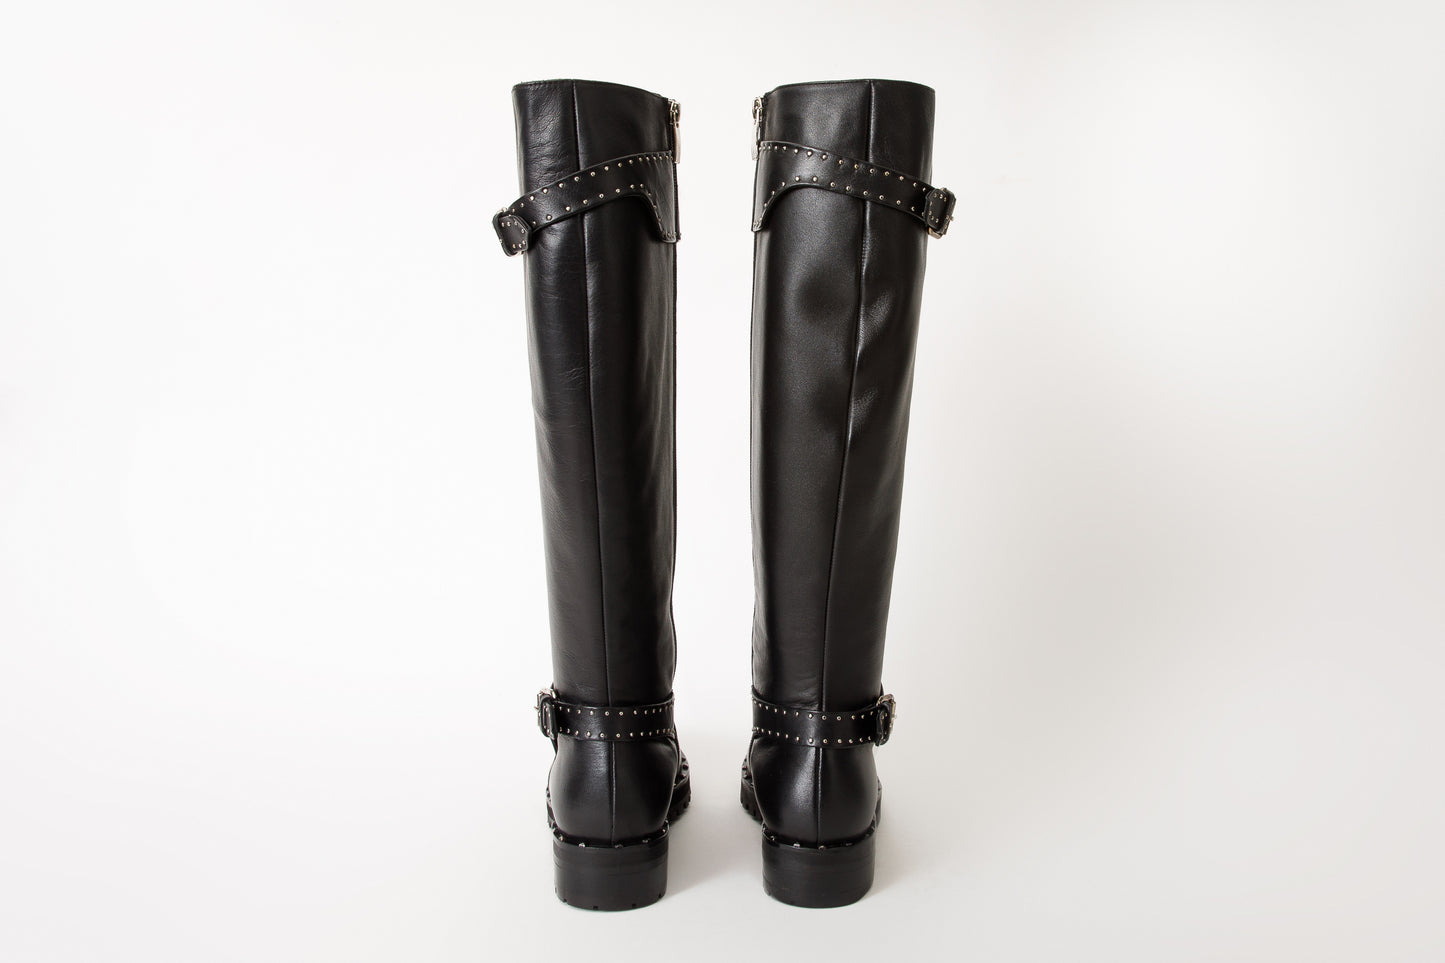 The Sariyer Black Leather Knee High Women Boot